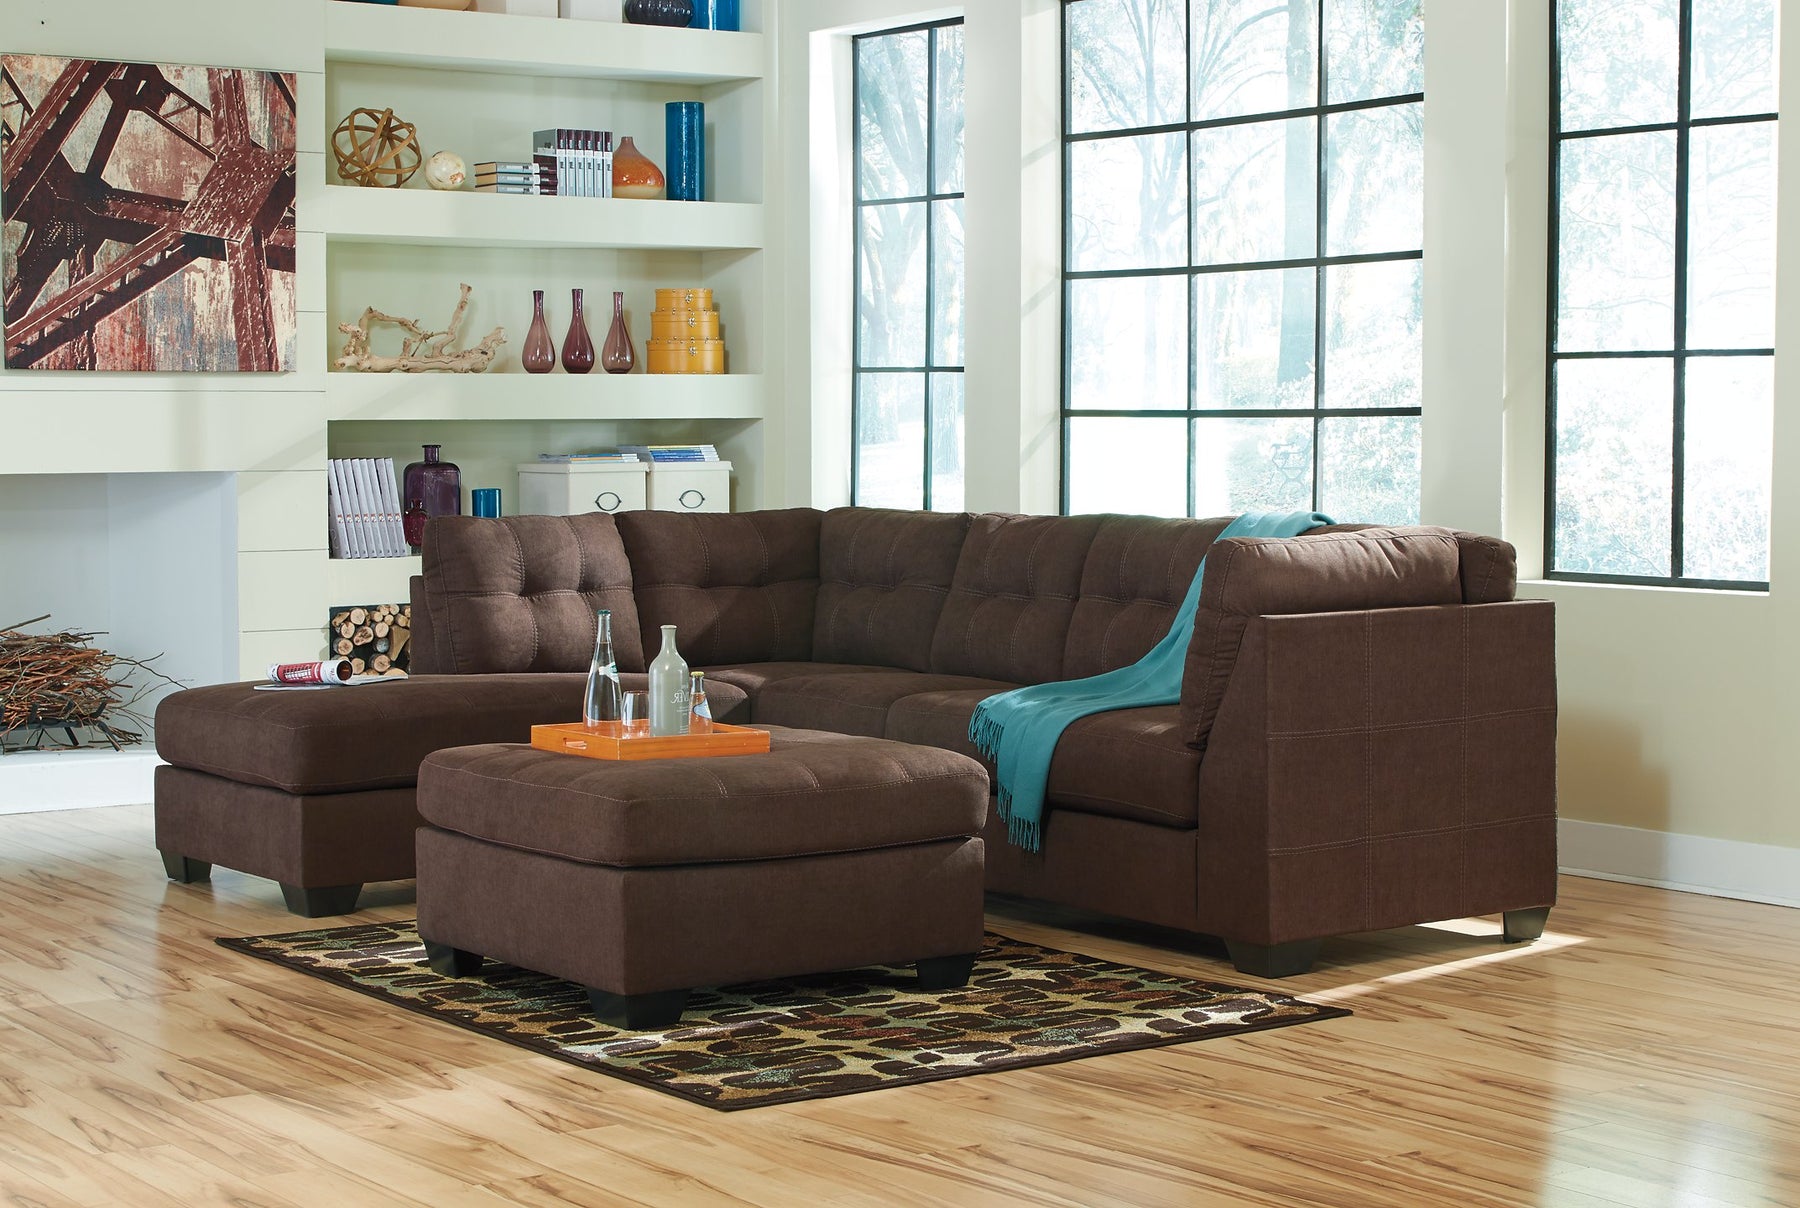 Maier Living Room Set - Half Price Furniture